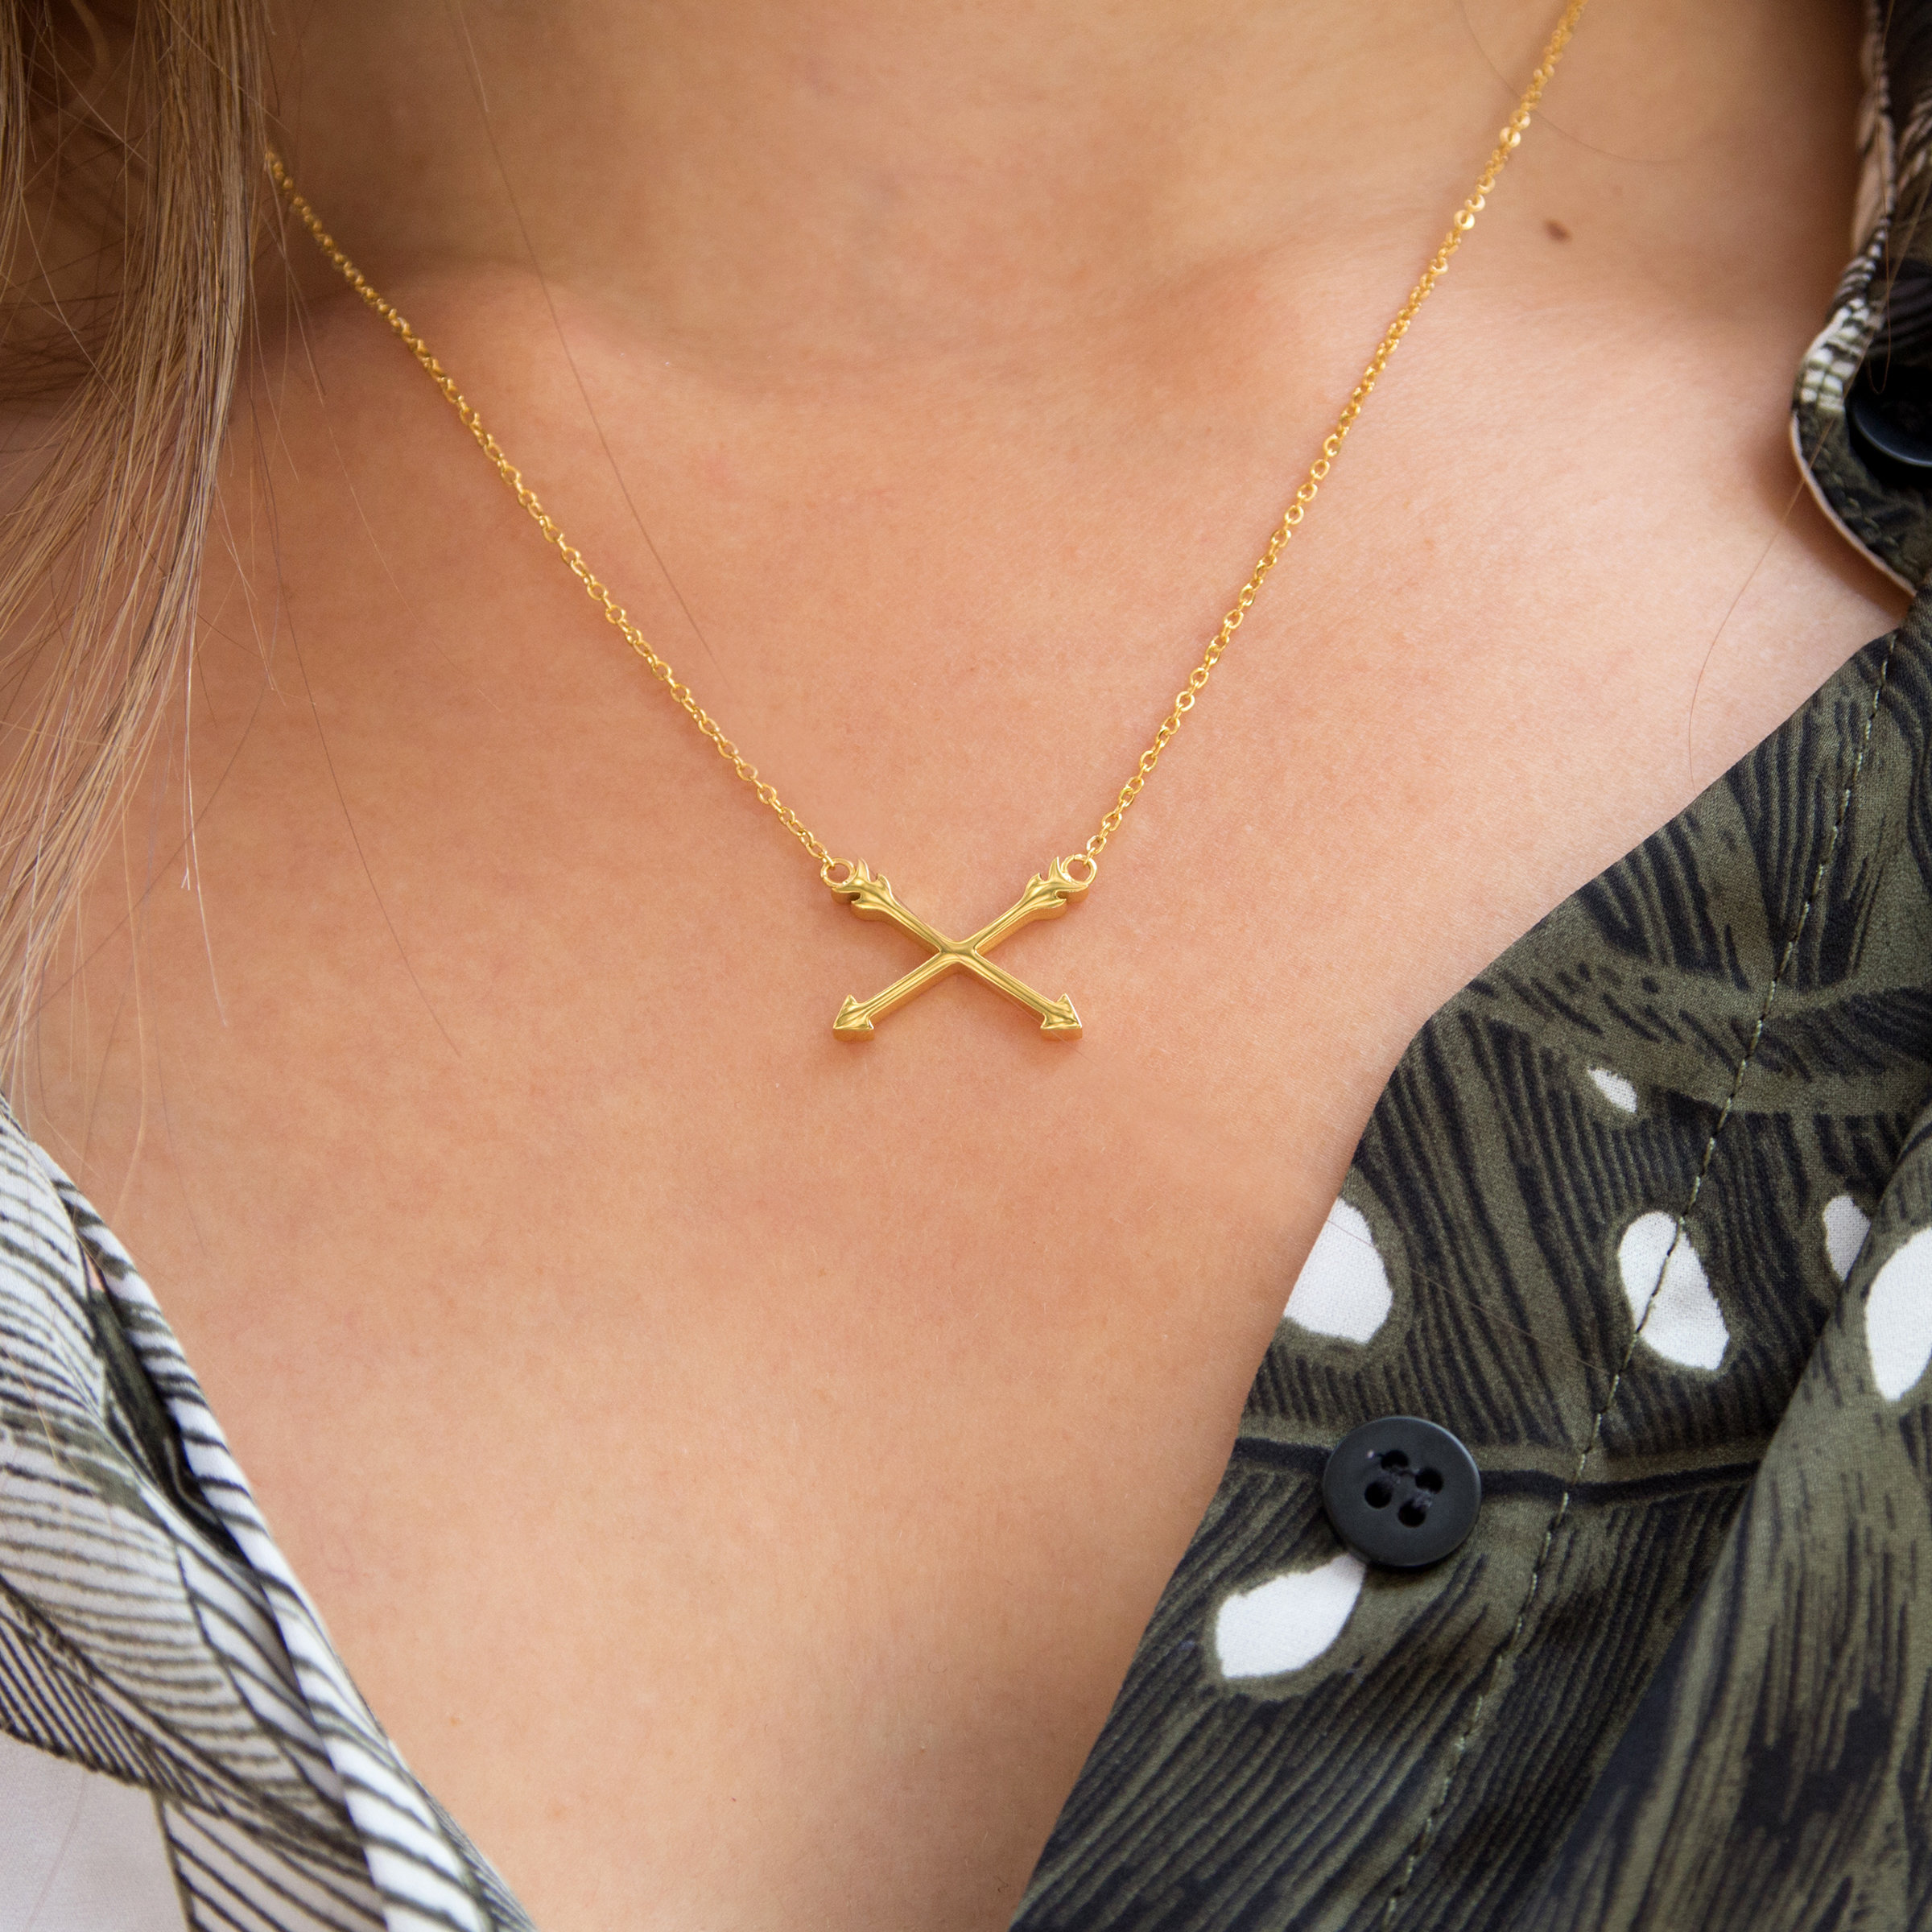 Kuku gold arrow necklace on model